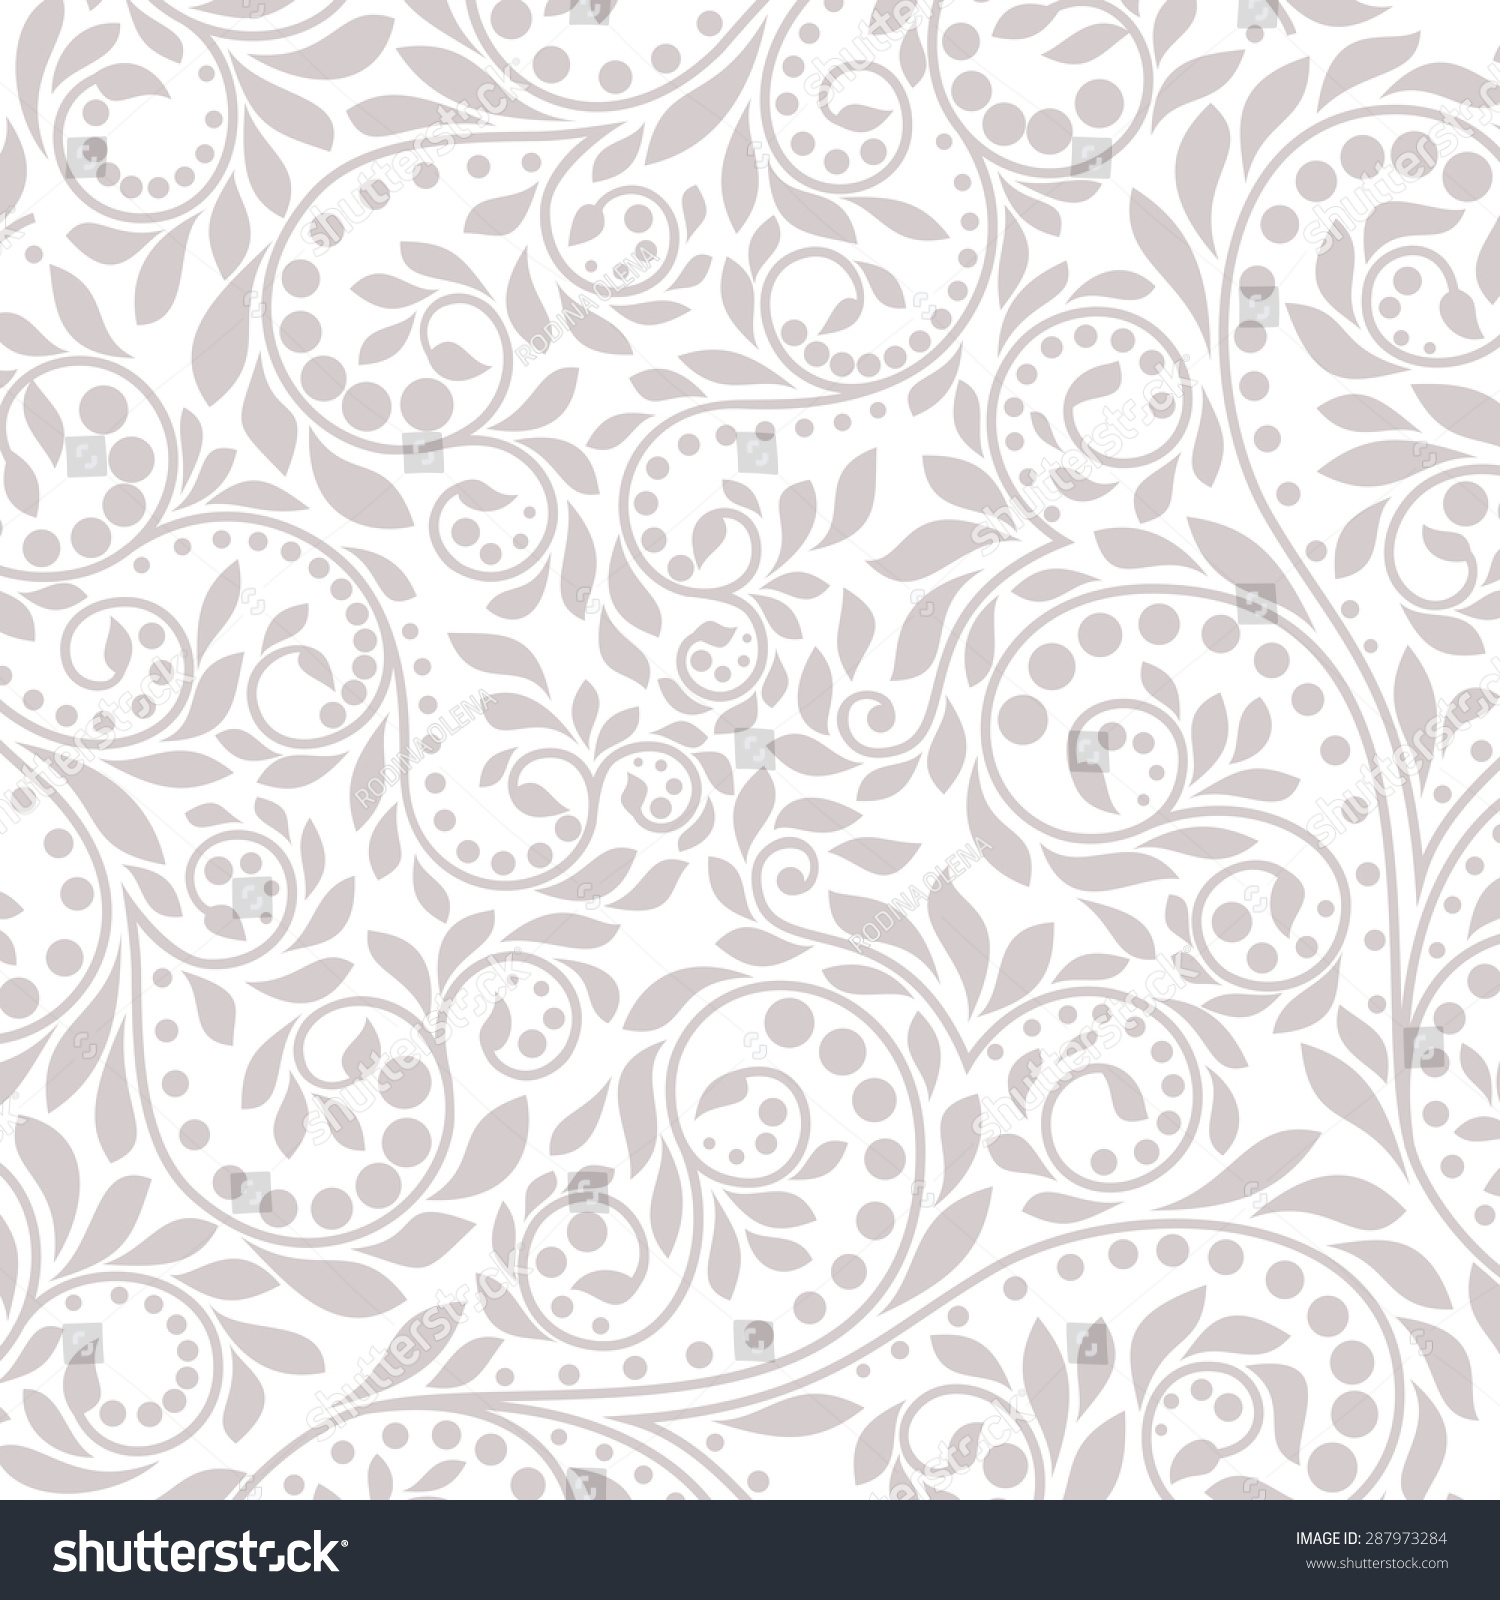 Floral Pattern Wallpaper Baroque Damask Gray Stock Illustration 287973284